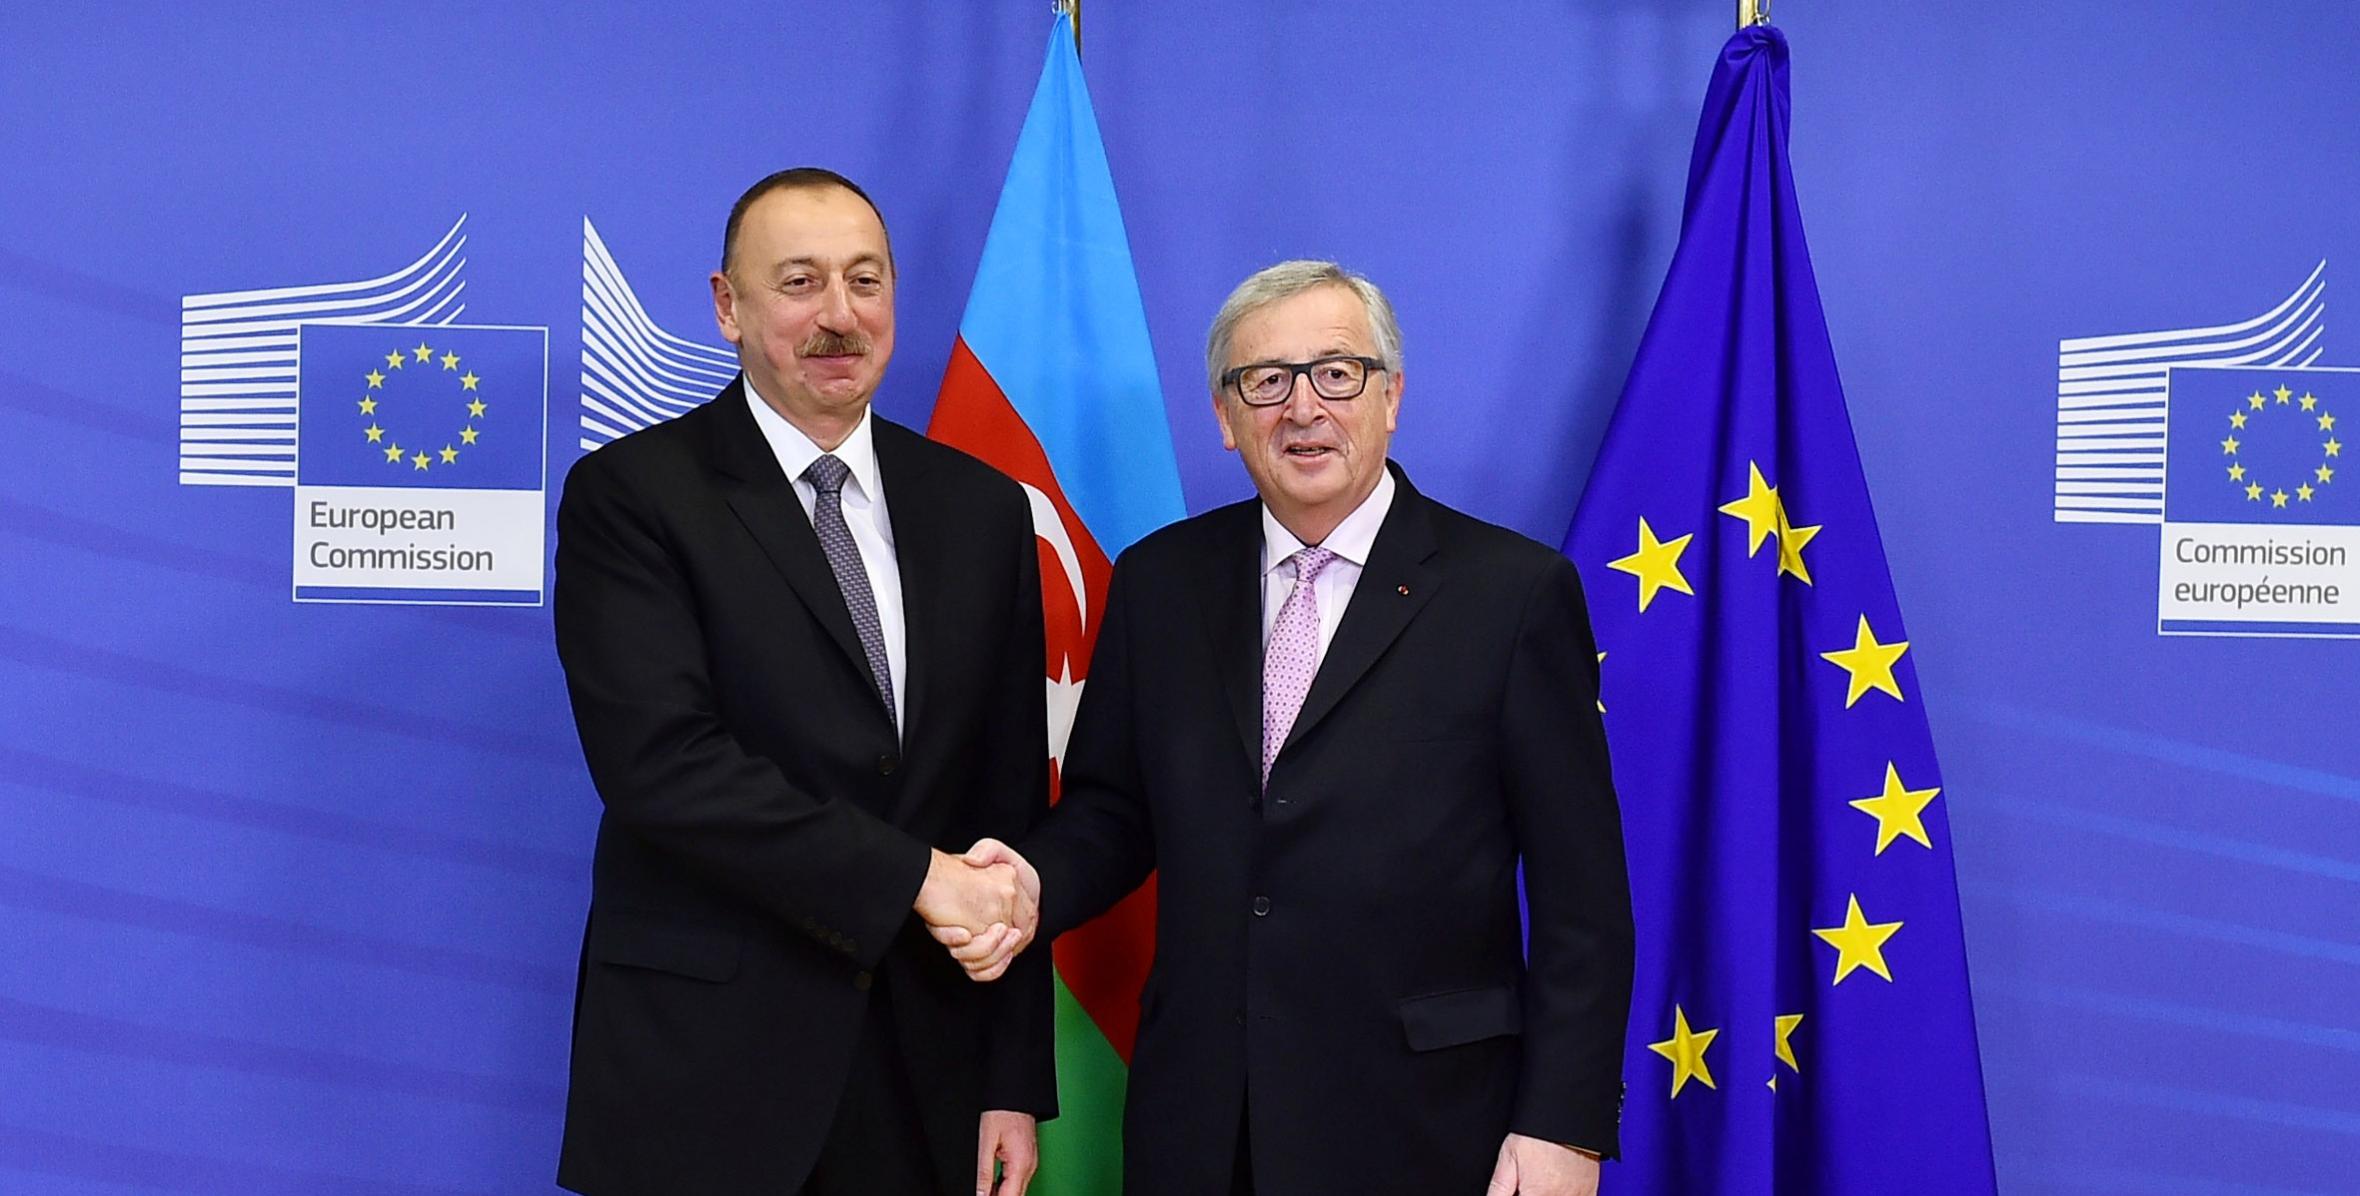 Ilham Aliyev met with President of European Commission Jean-Claude Juncker